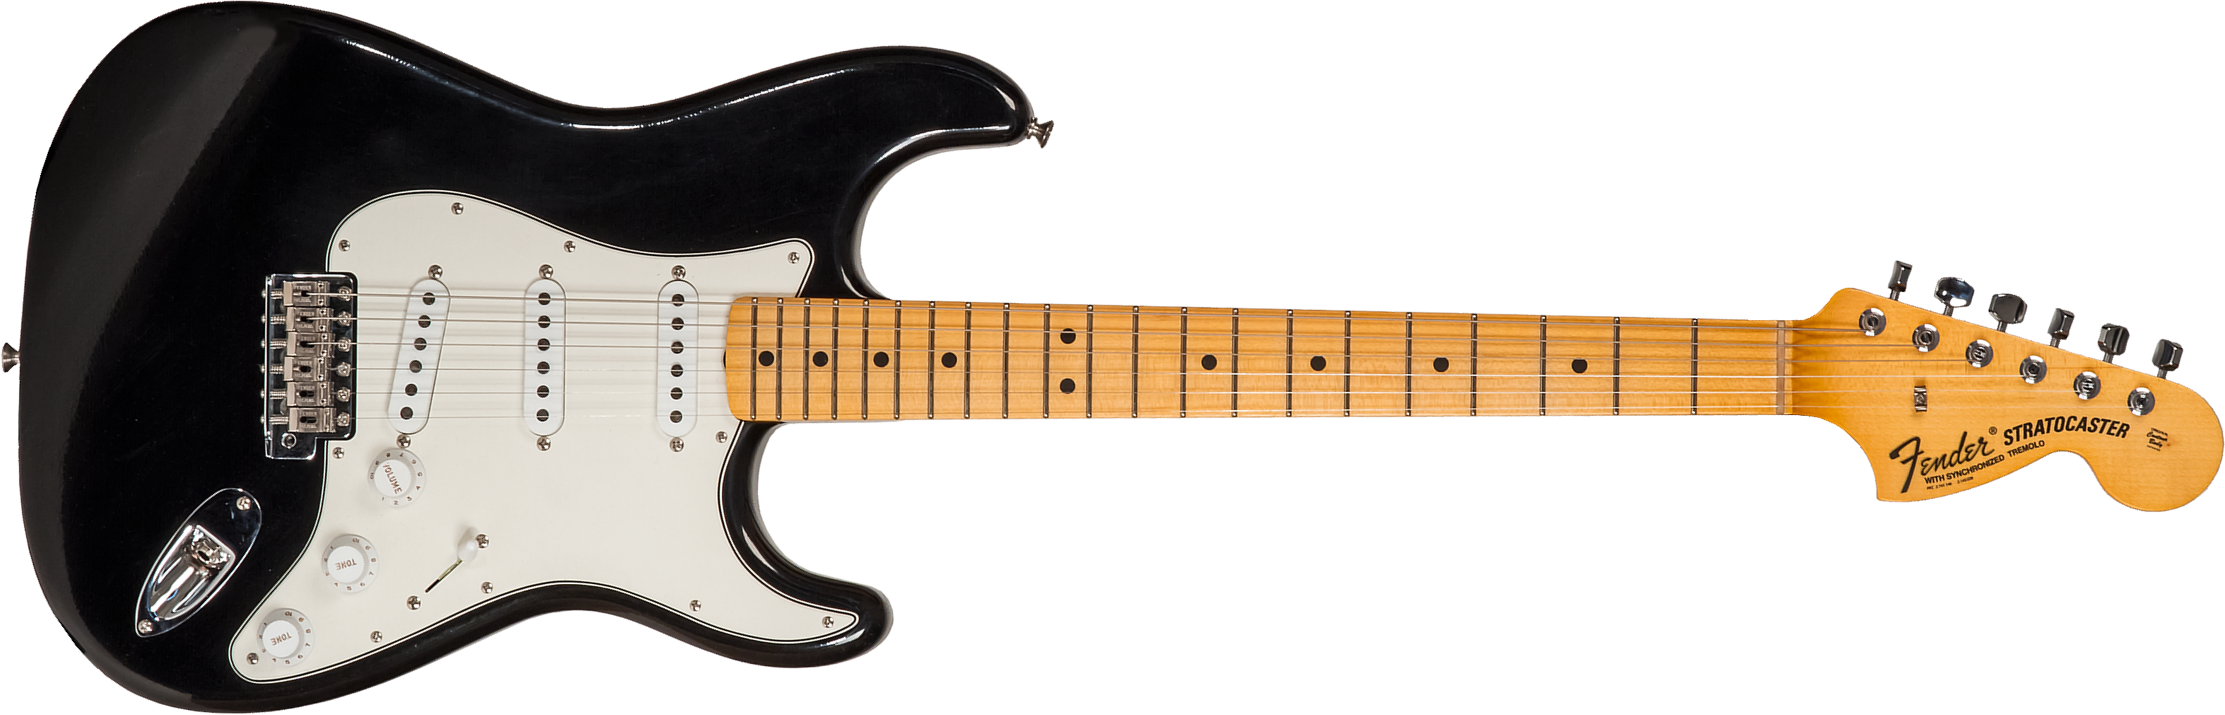 Fender Custom Shop Strat 1969 3s Trem Mn #r127670 - Closet Classic Black - Str shape electric guitar - Main picture